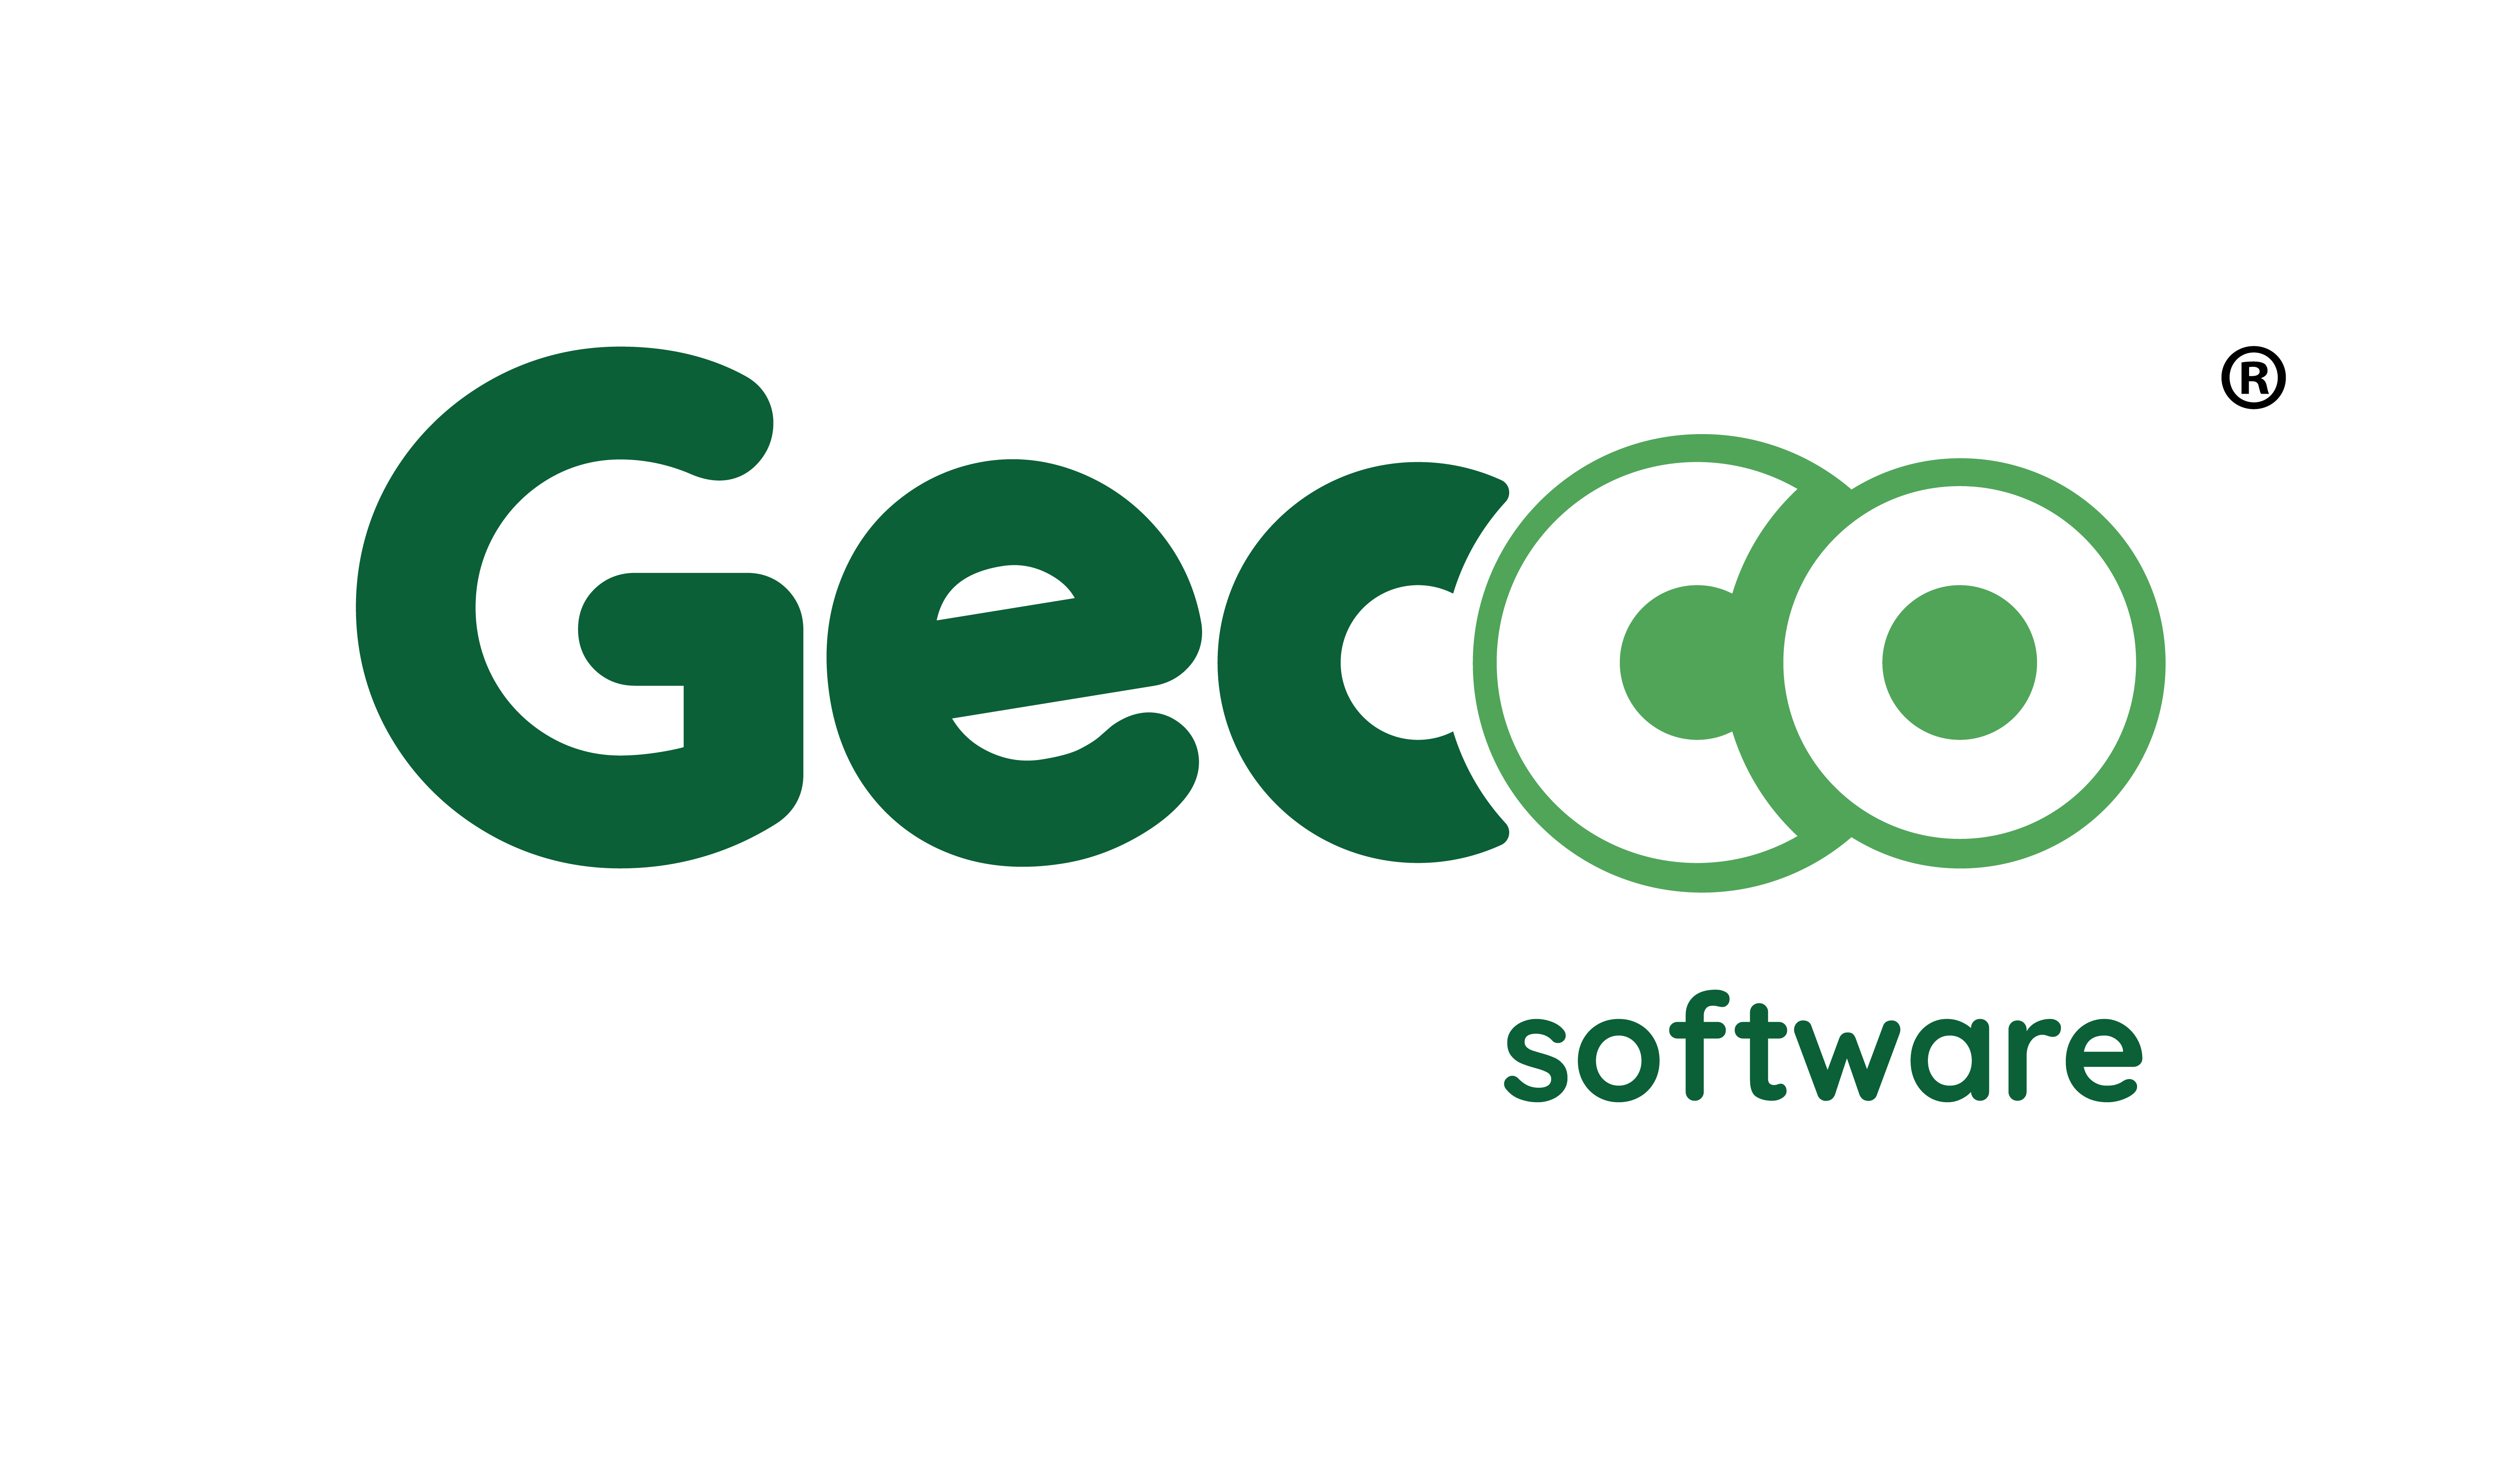 Gecco Software Ltd